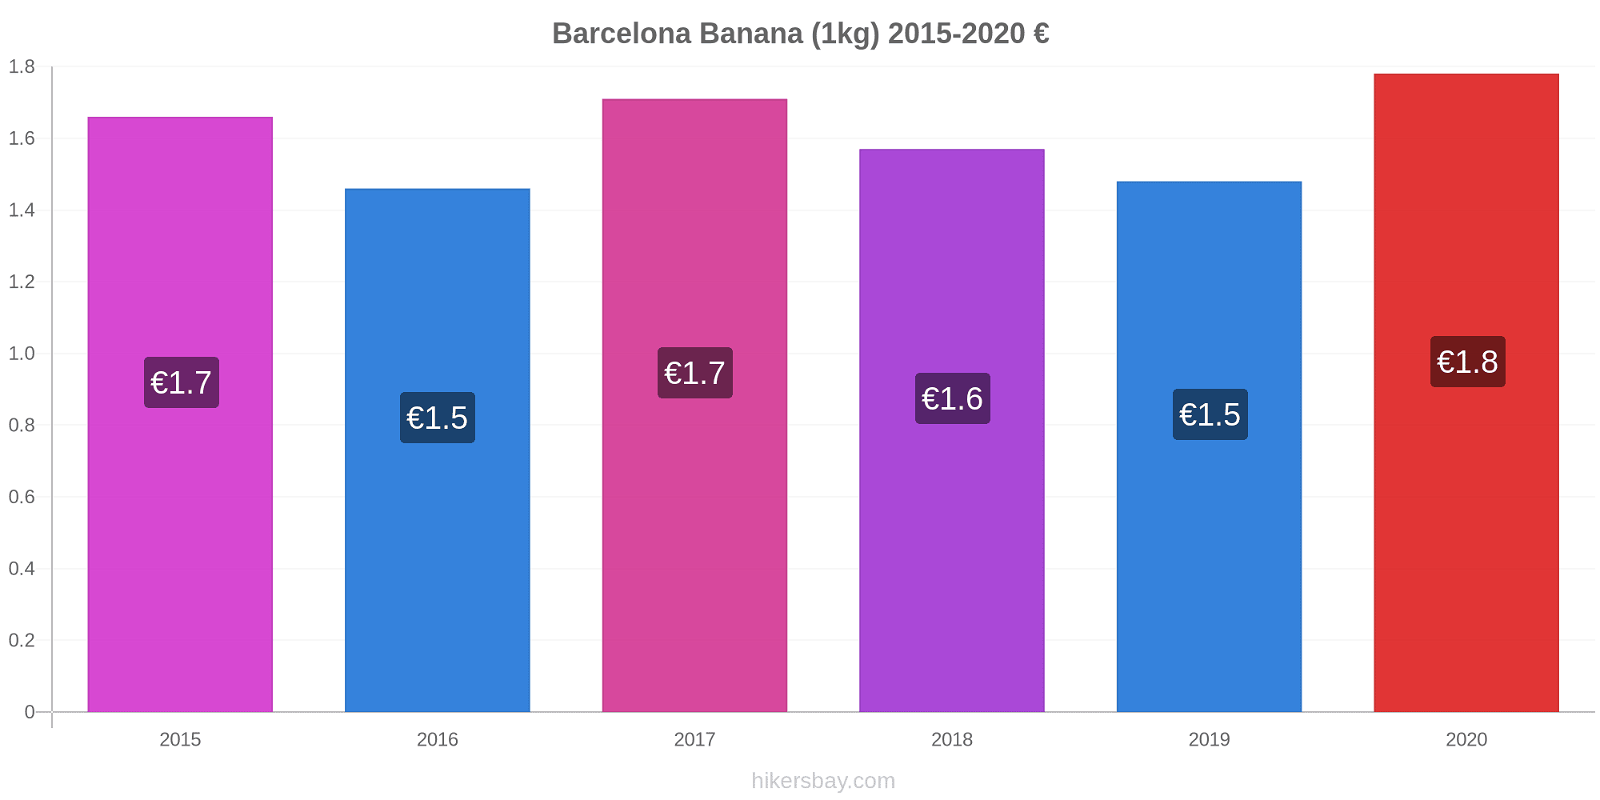 Barcelona modificări de preț Banana (1kg) hikersbay.com